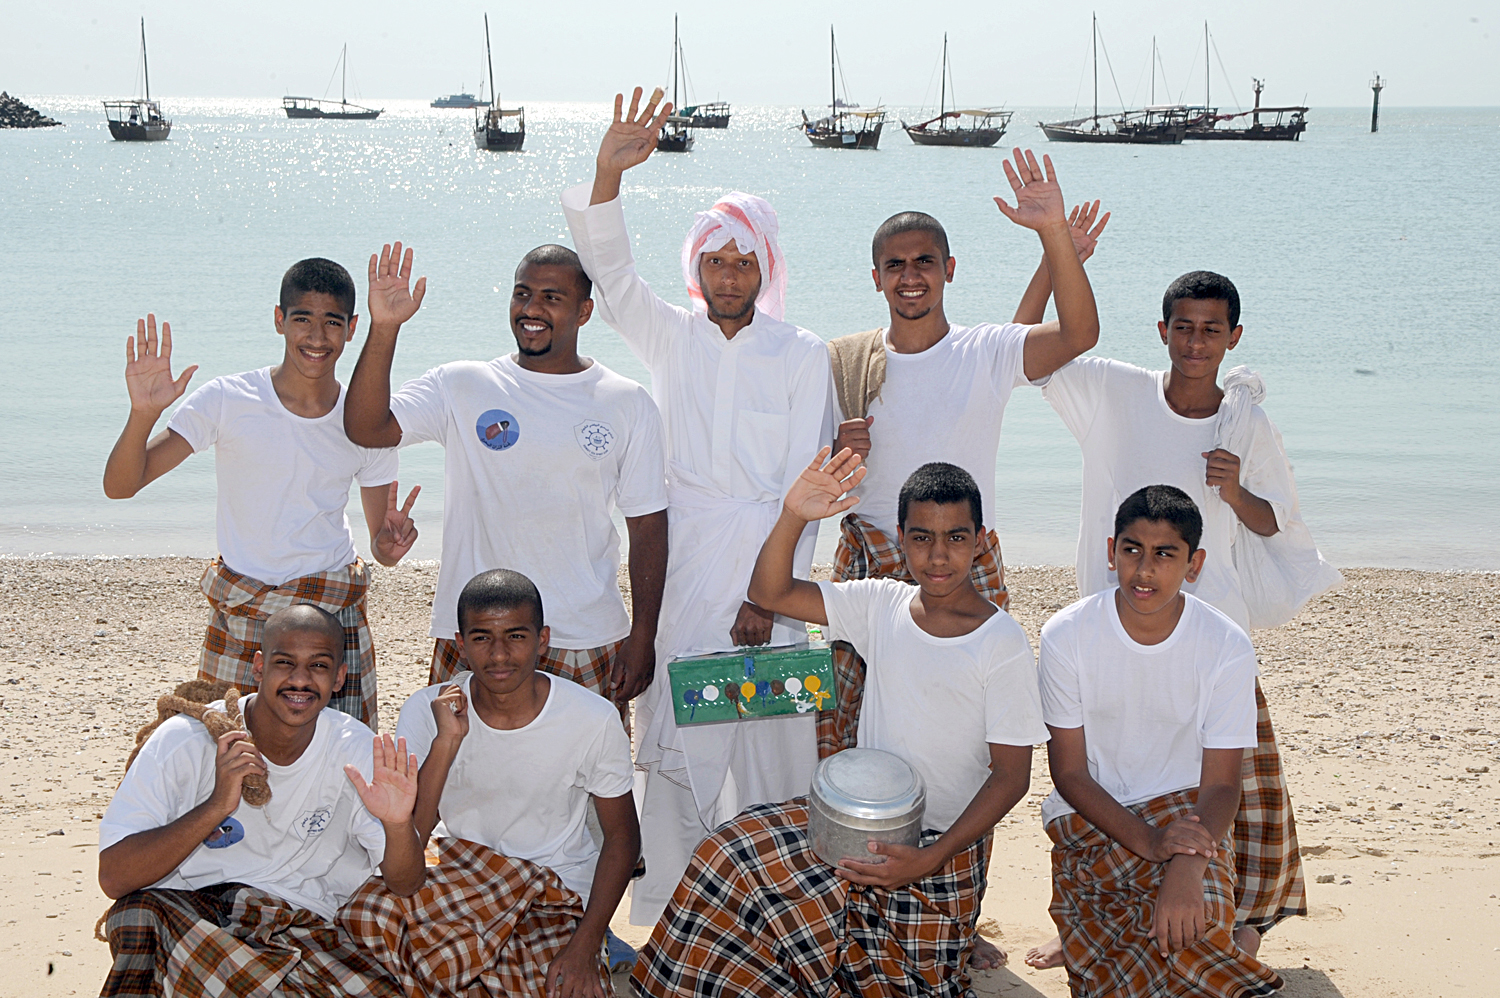 Kuwait's annual pearl diving trip begins